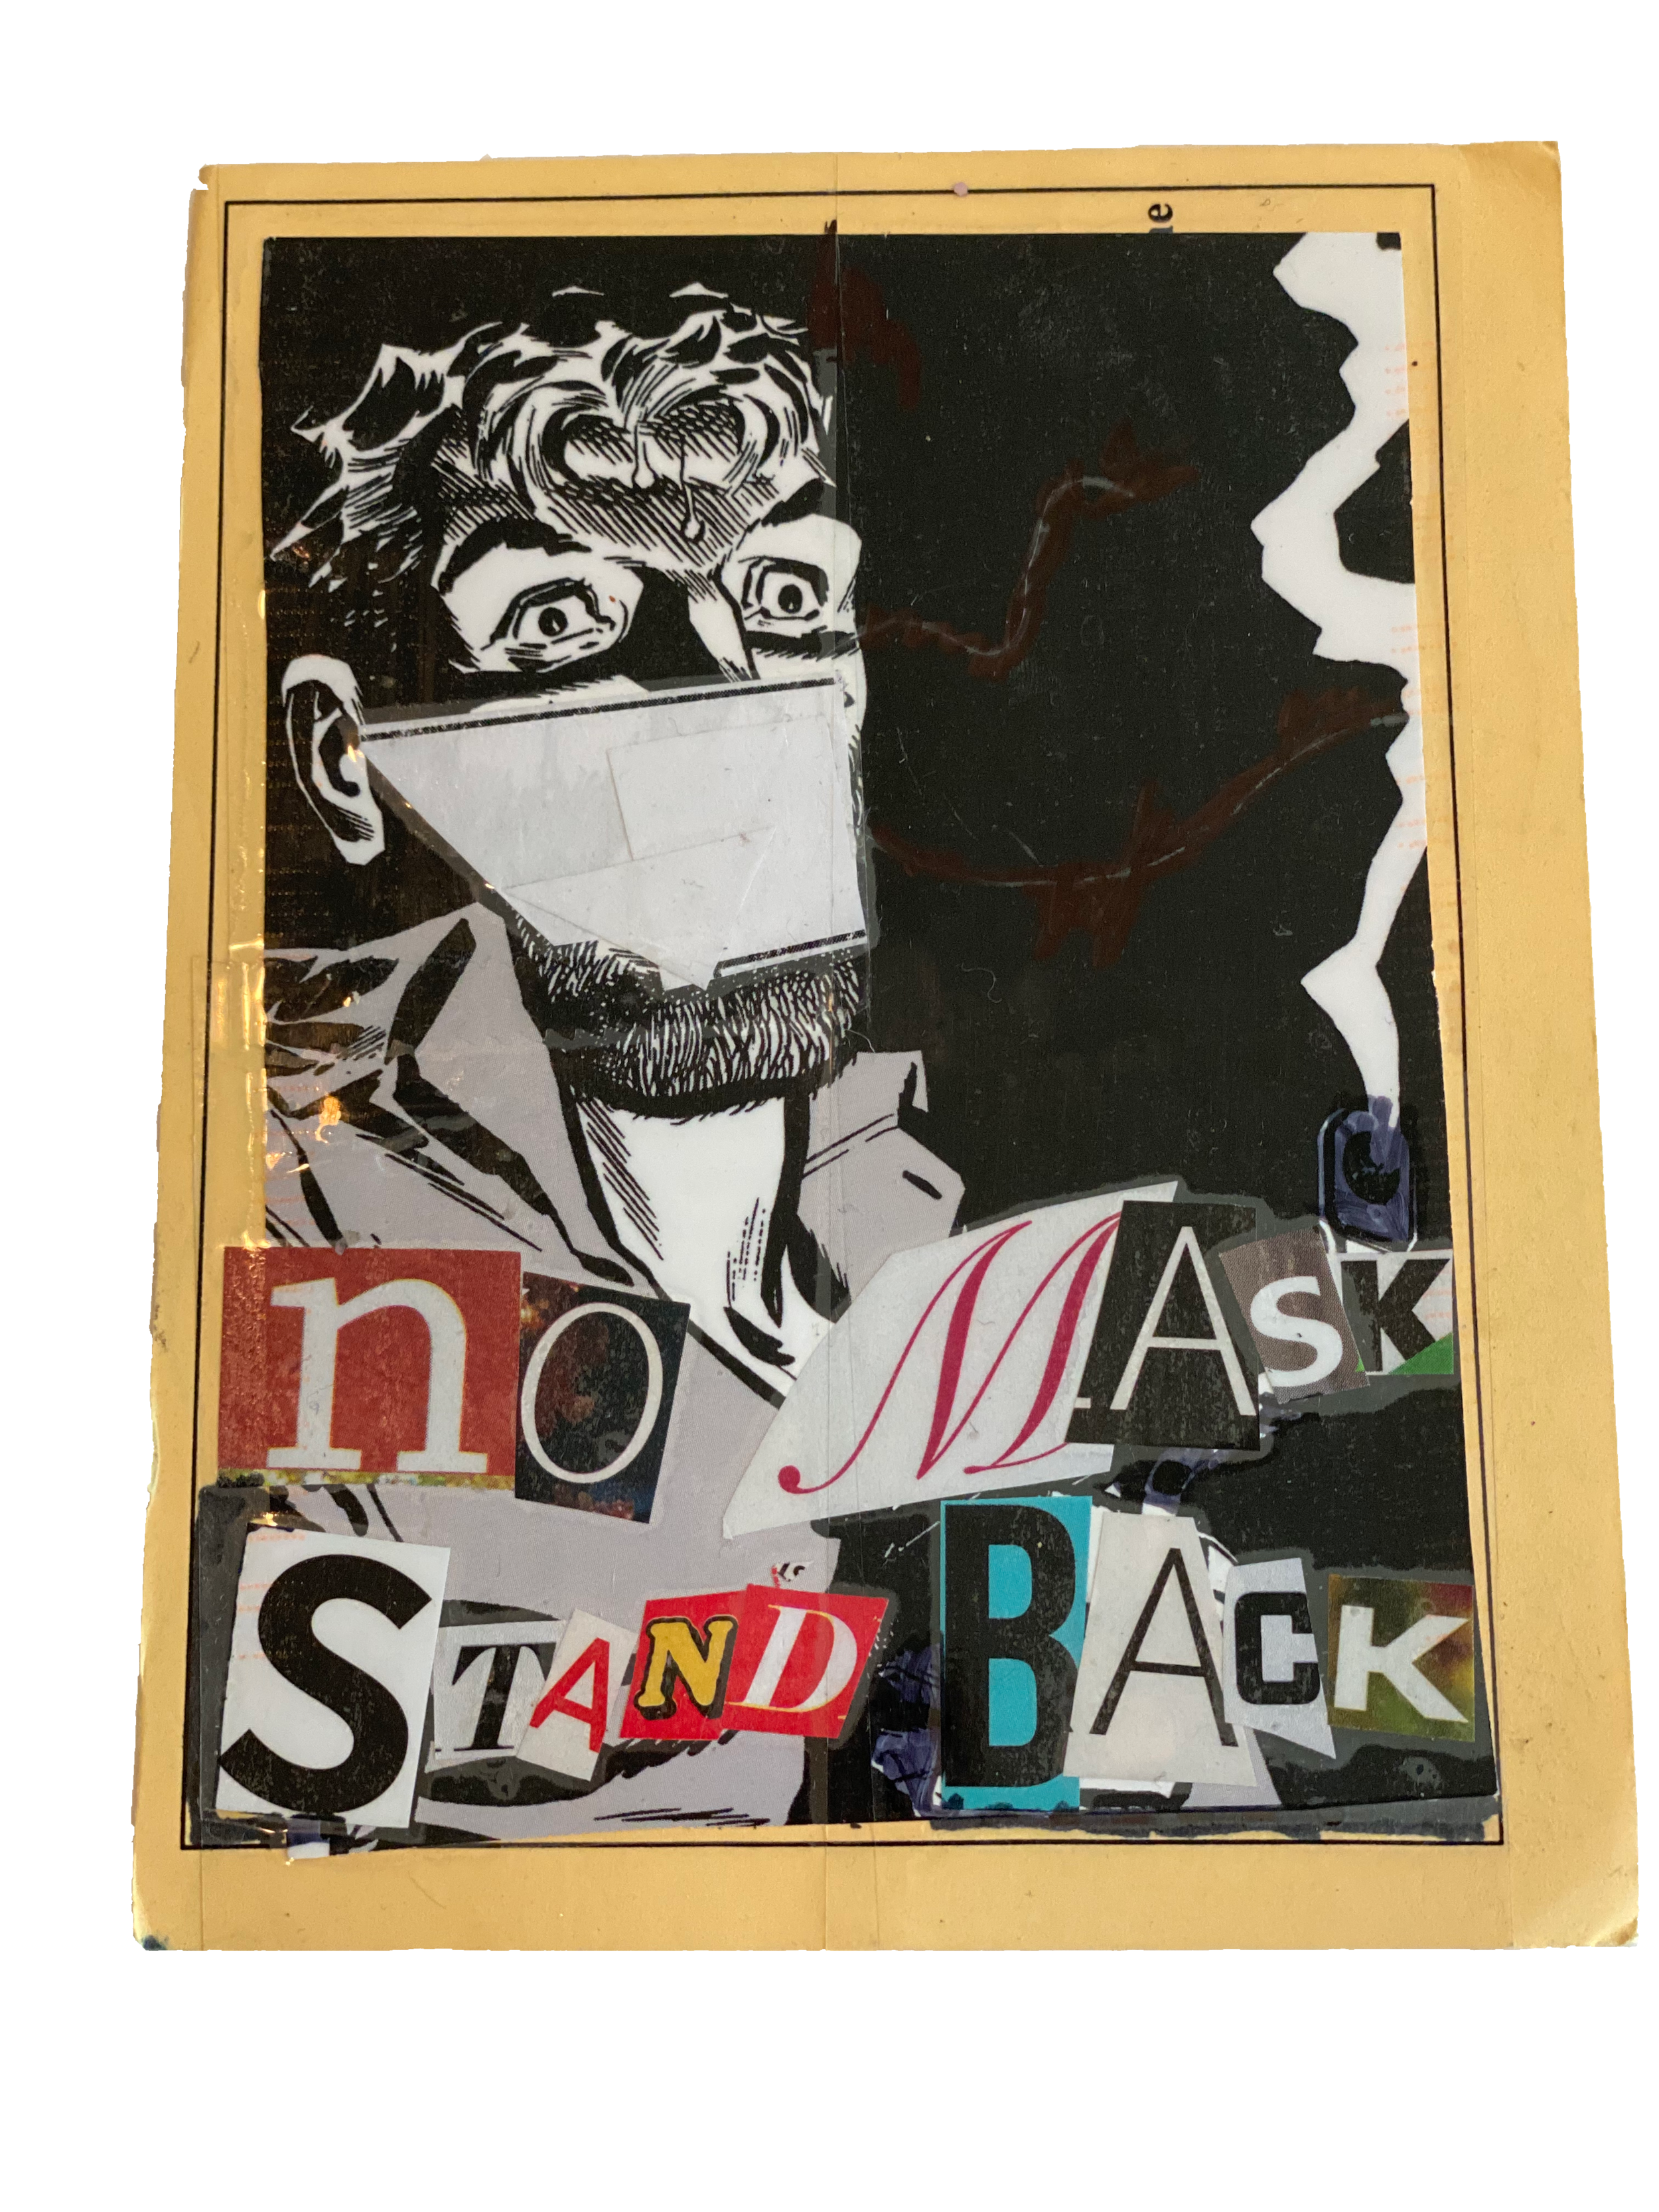 No Mask, Stand Back by ADDADADA.png